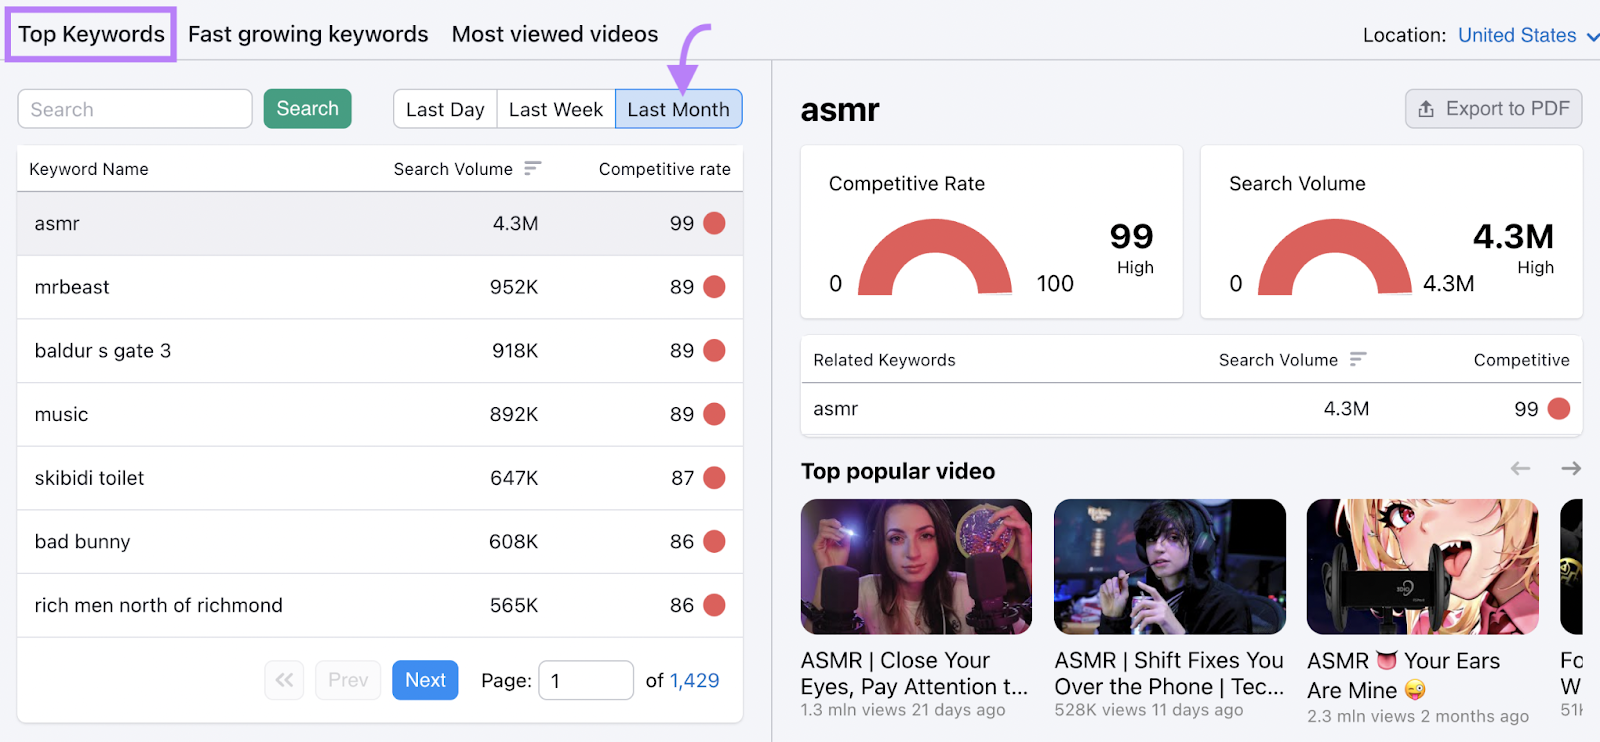 Keyword Analytics for YouTube "Top Keywords" dashboard